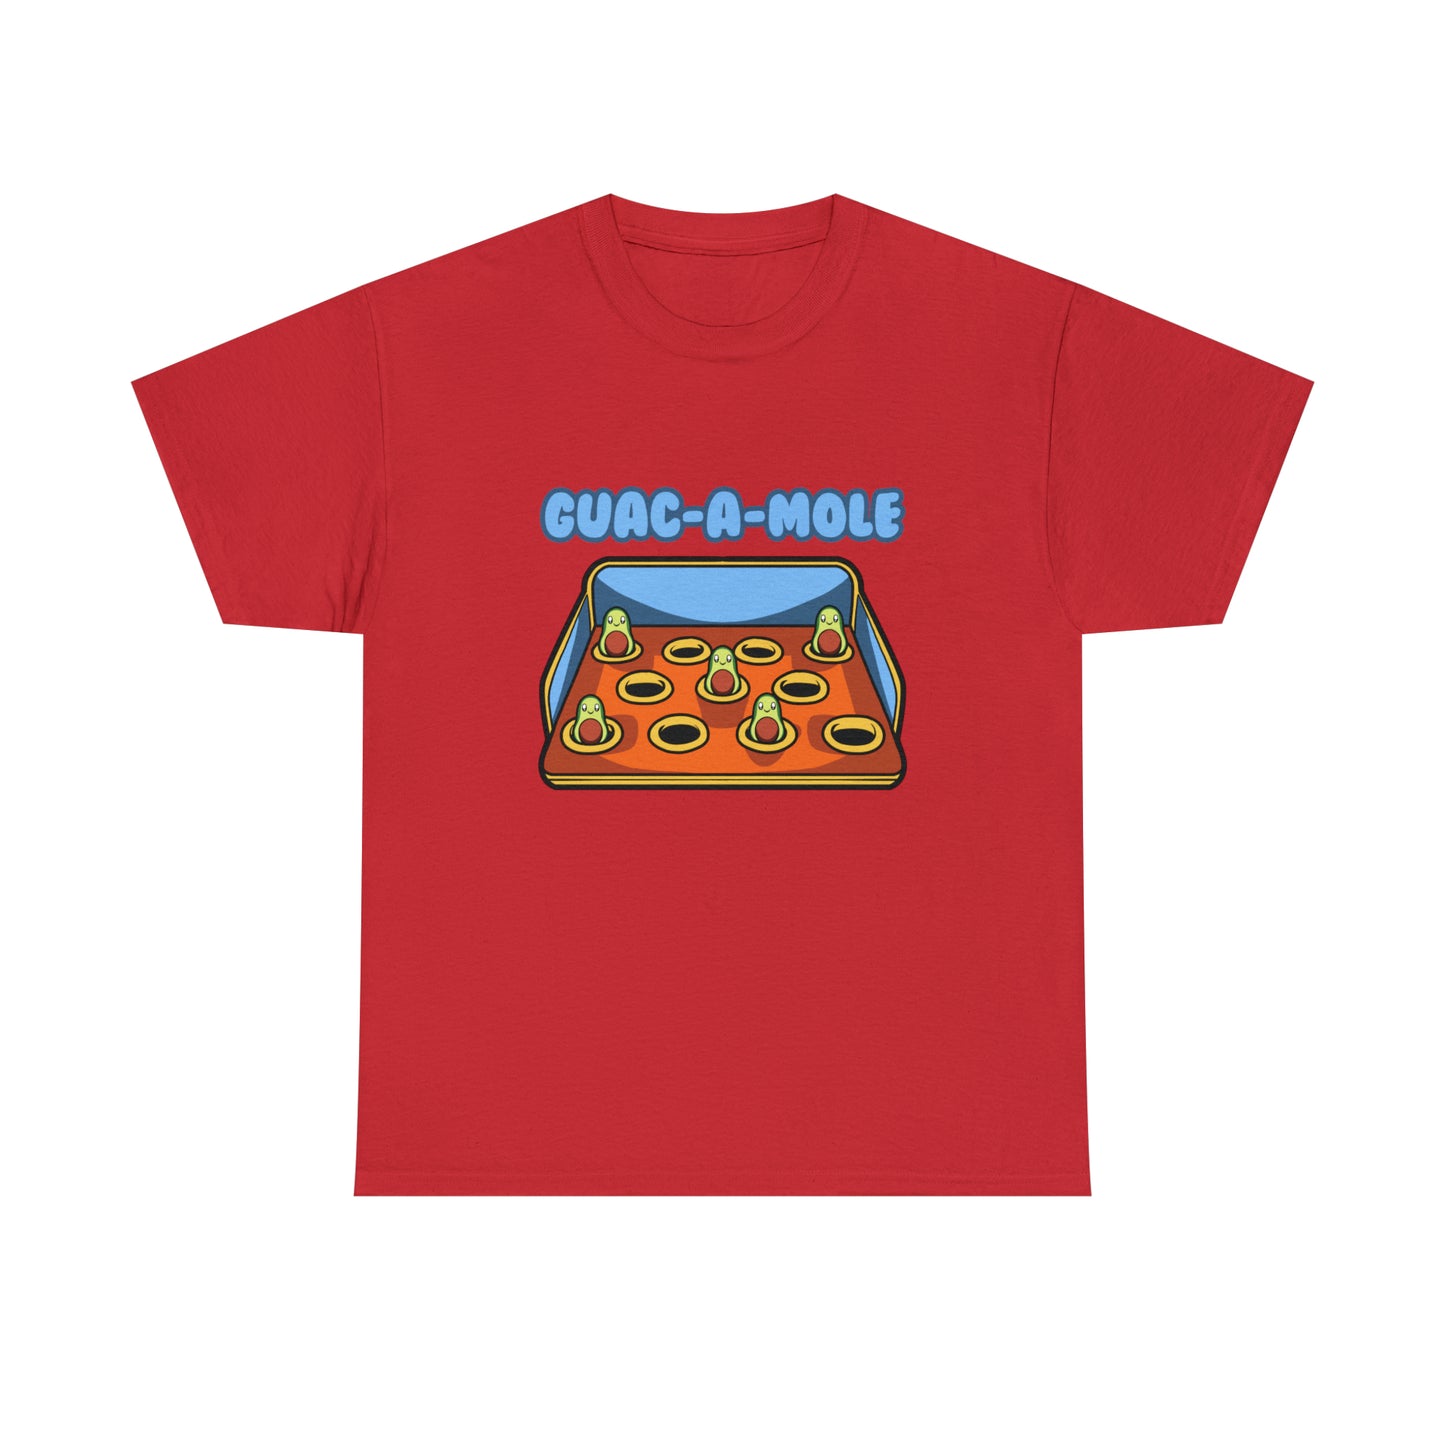 Custom Parody T-shirt, Guac-a-mole design